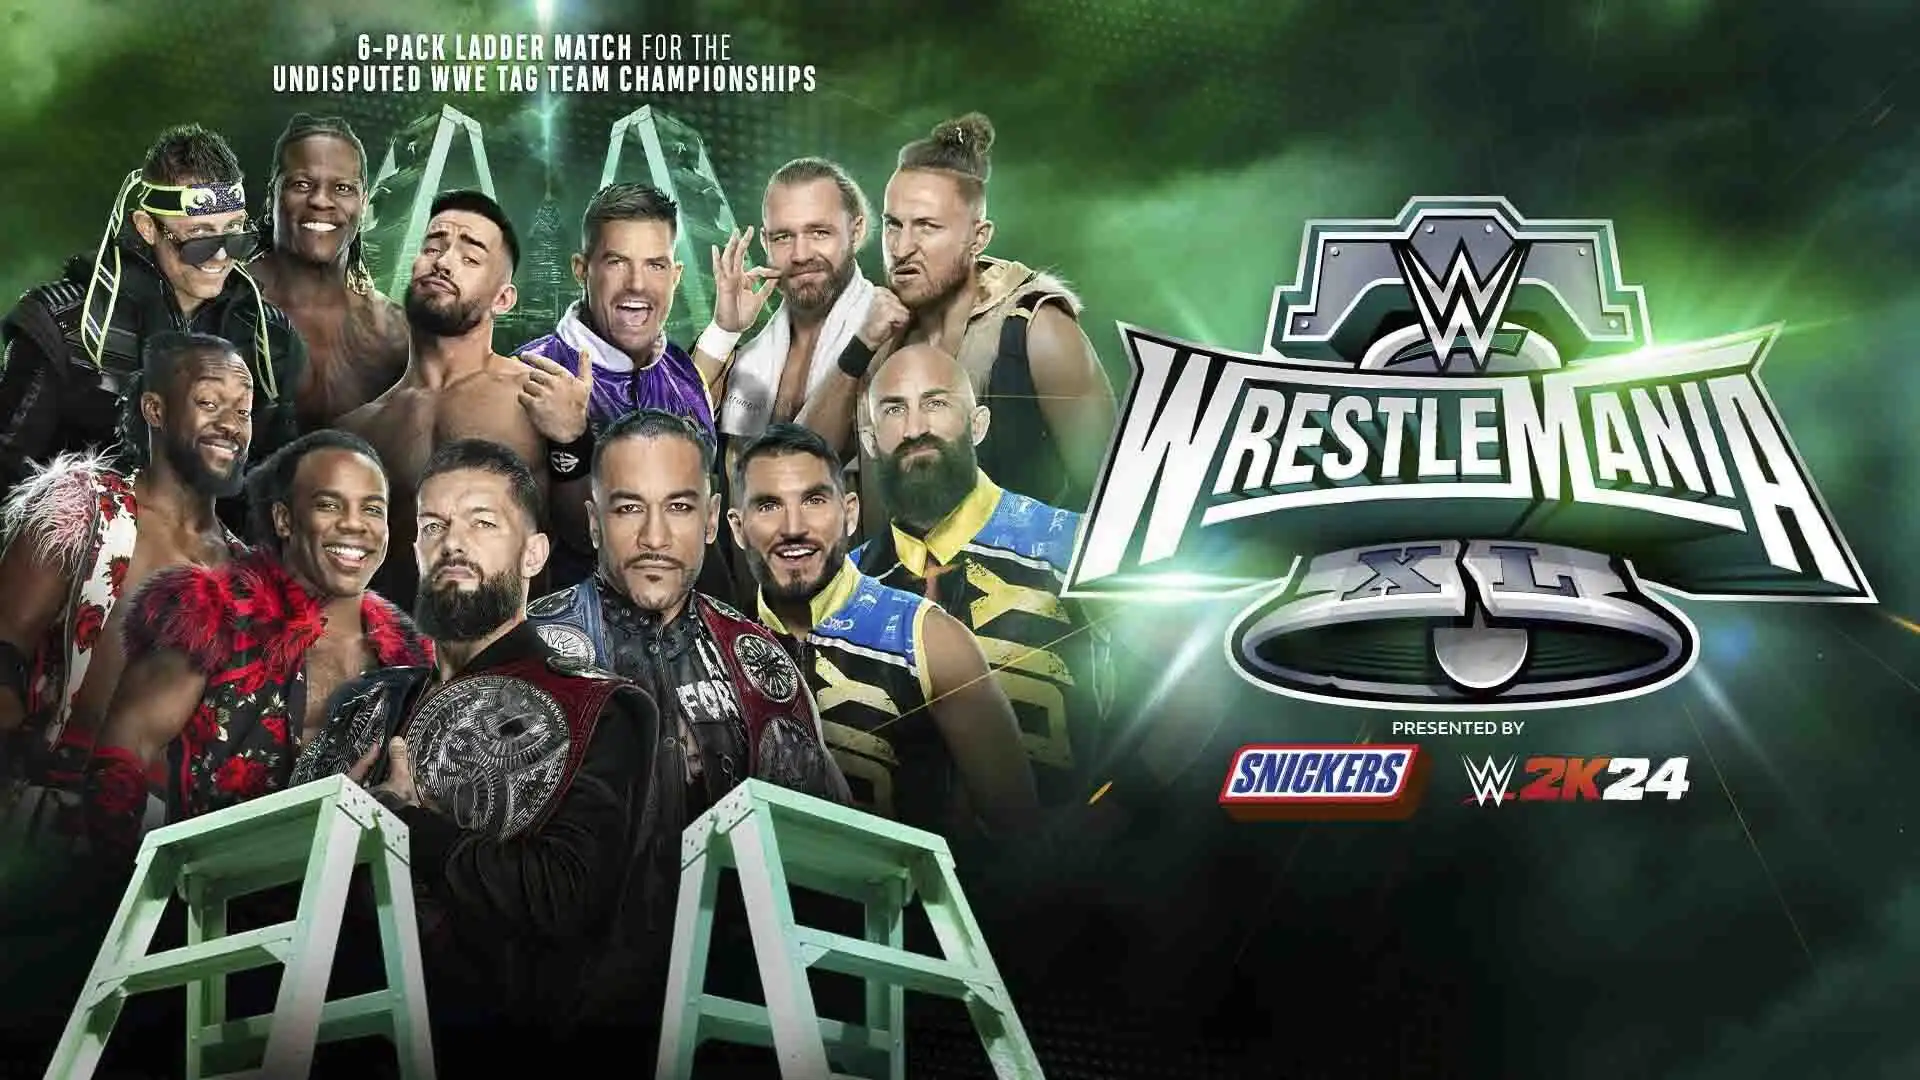 Undisputed WWE Tag Team Championship - Six-Pack Ladder Match (Night 1):